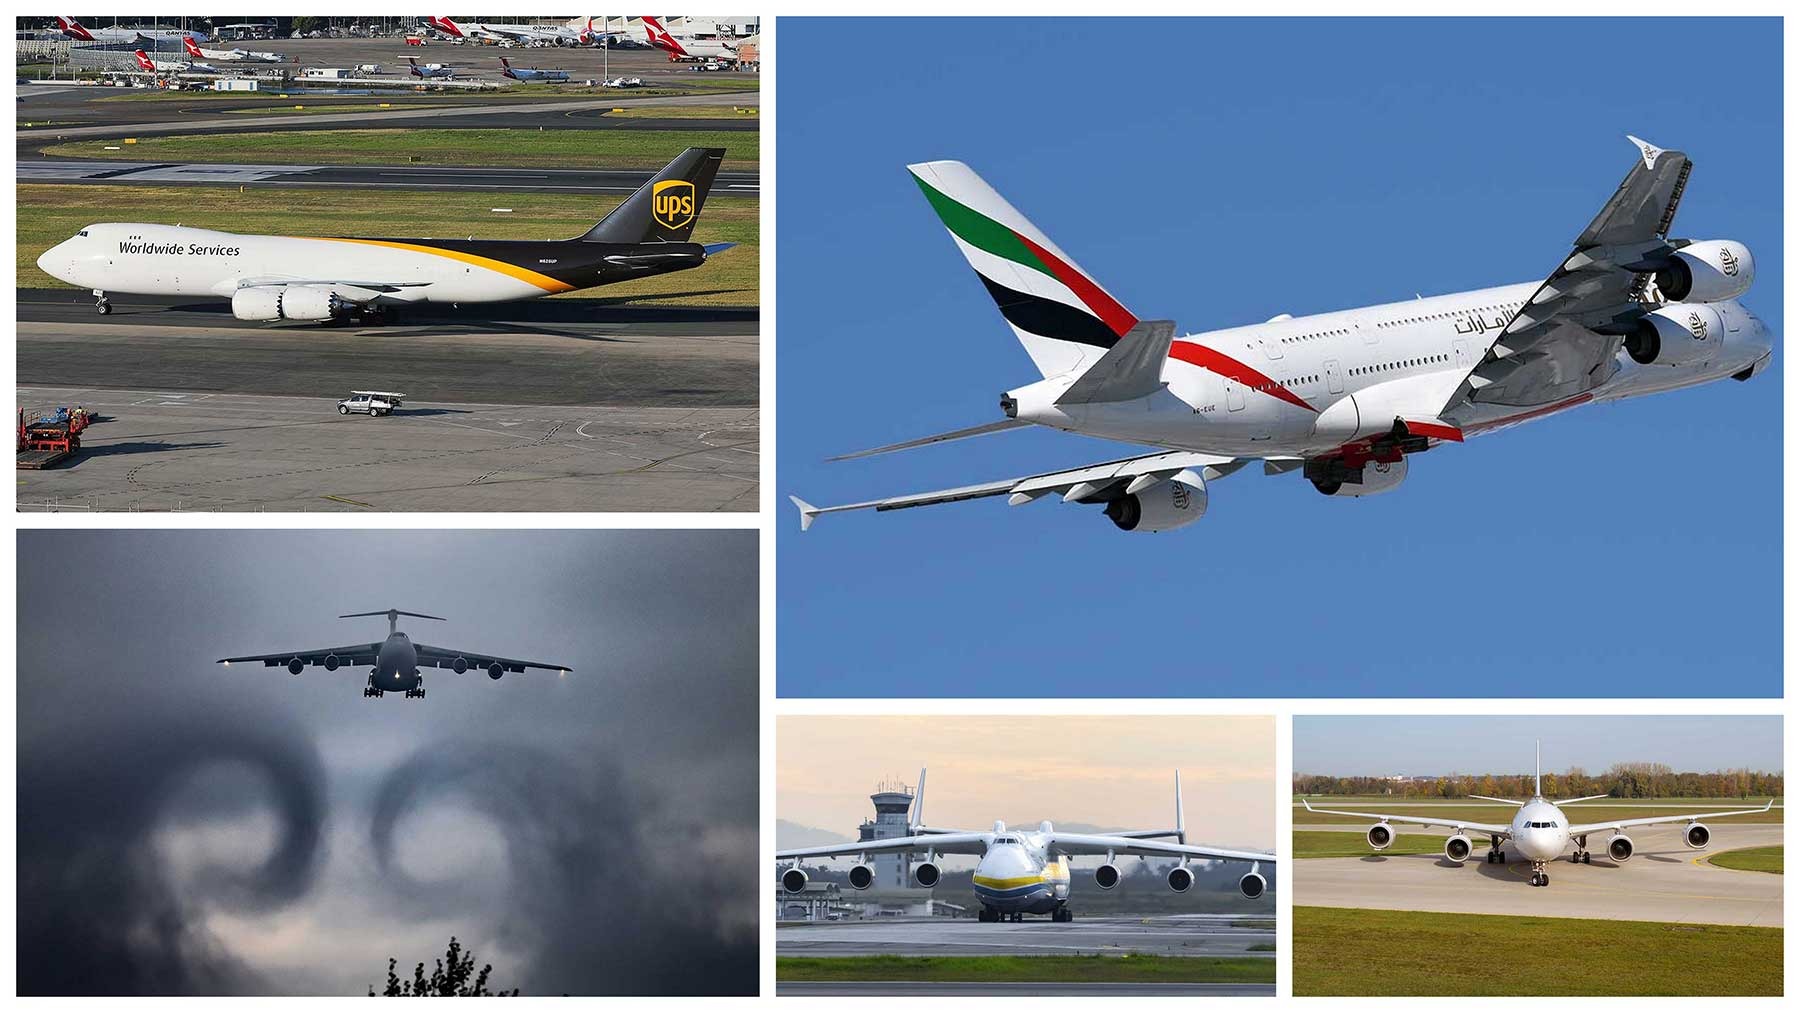 Beluga, Mriya et les plus gros avions du monde